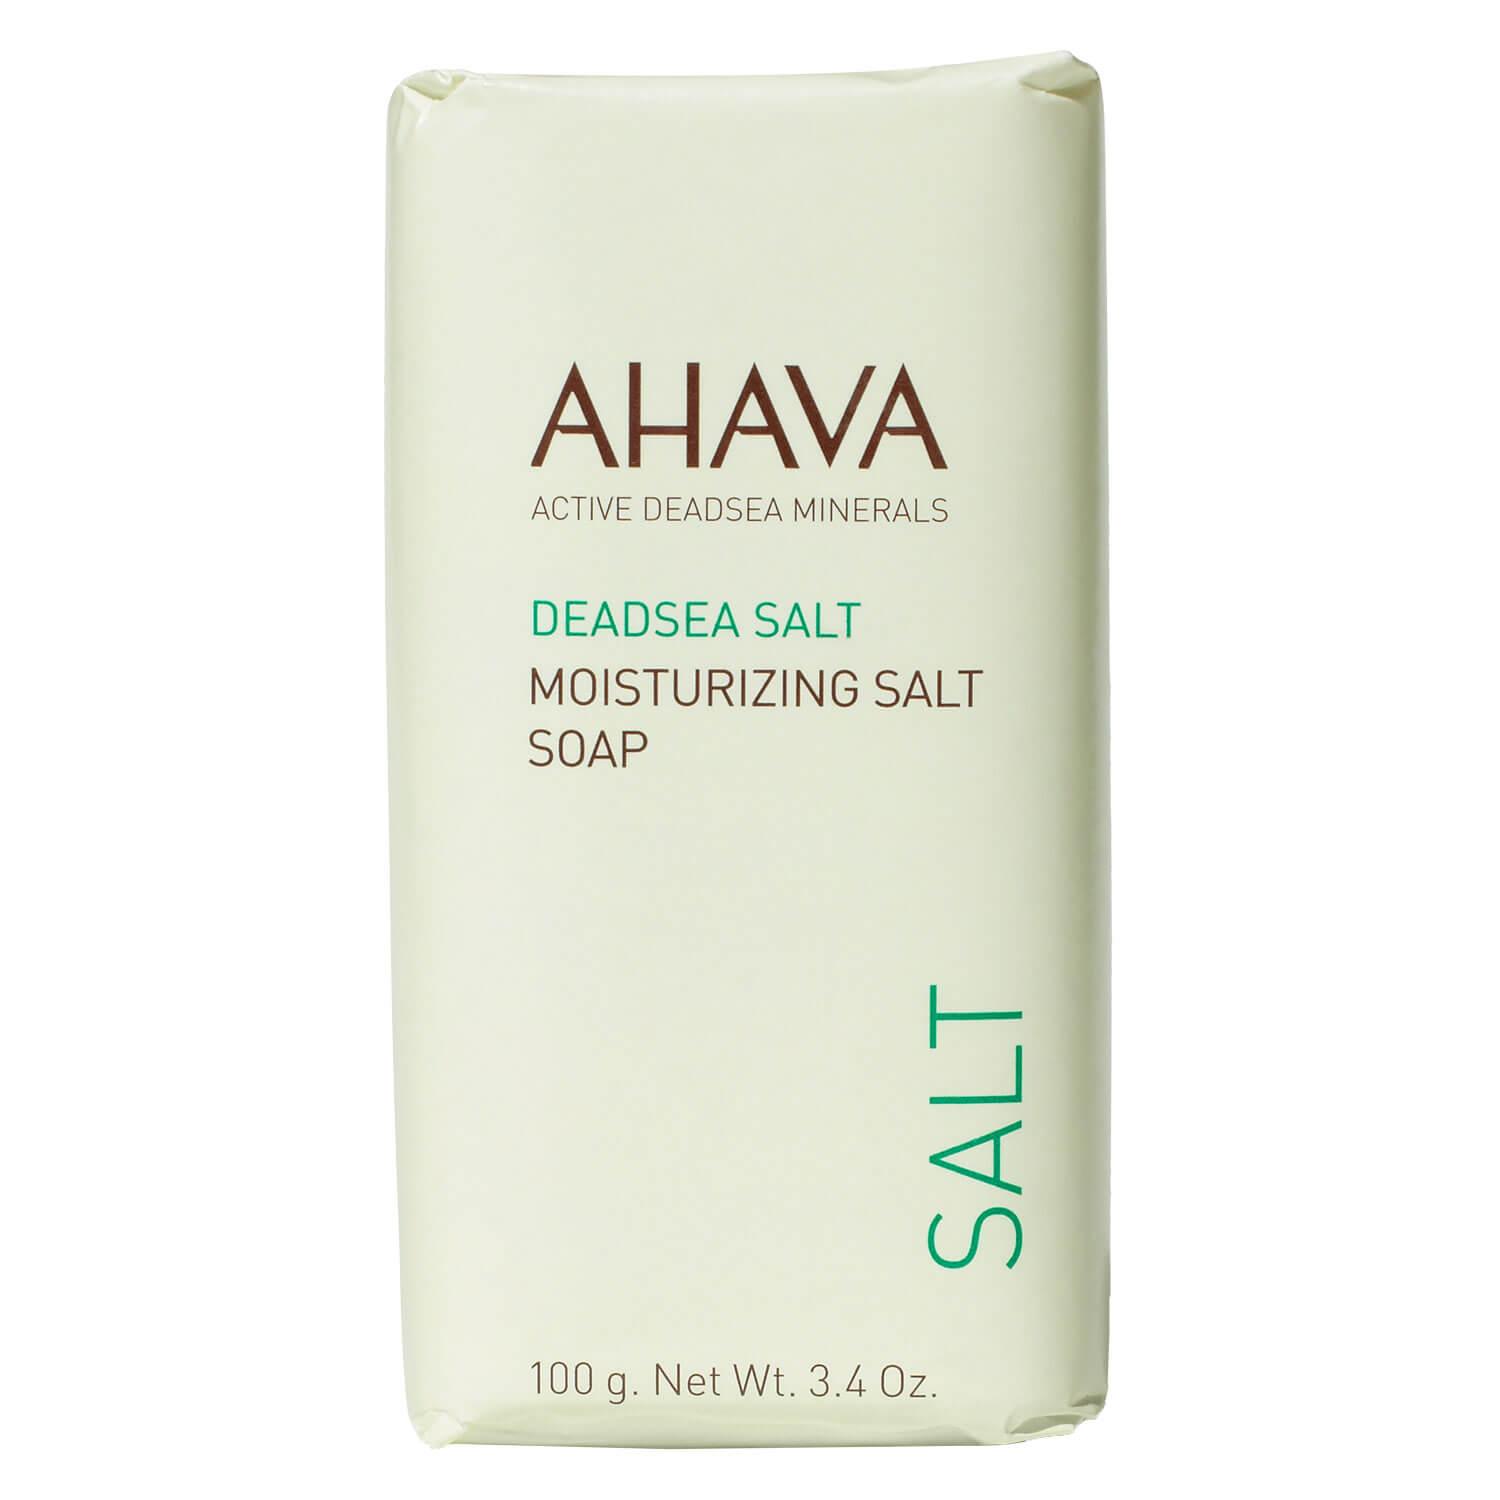 DeadSea Salt - Moisturizing Salt Soap